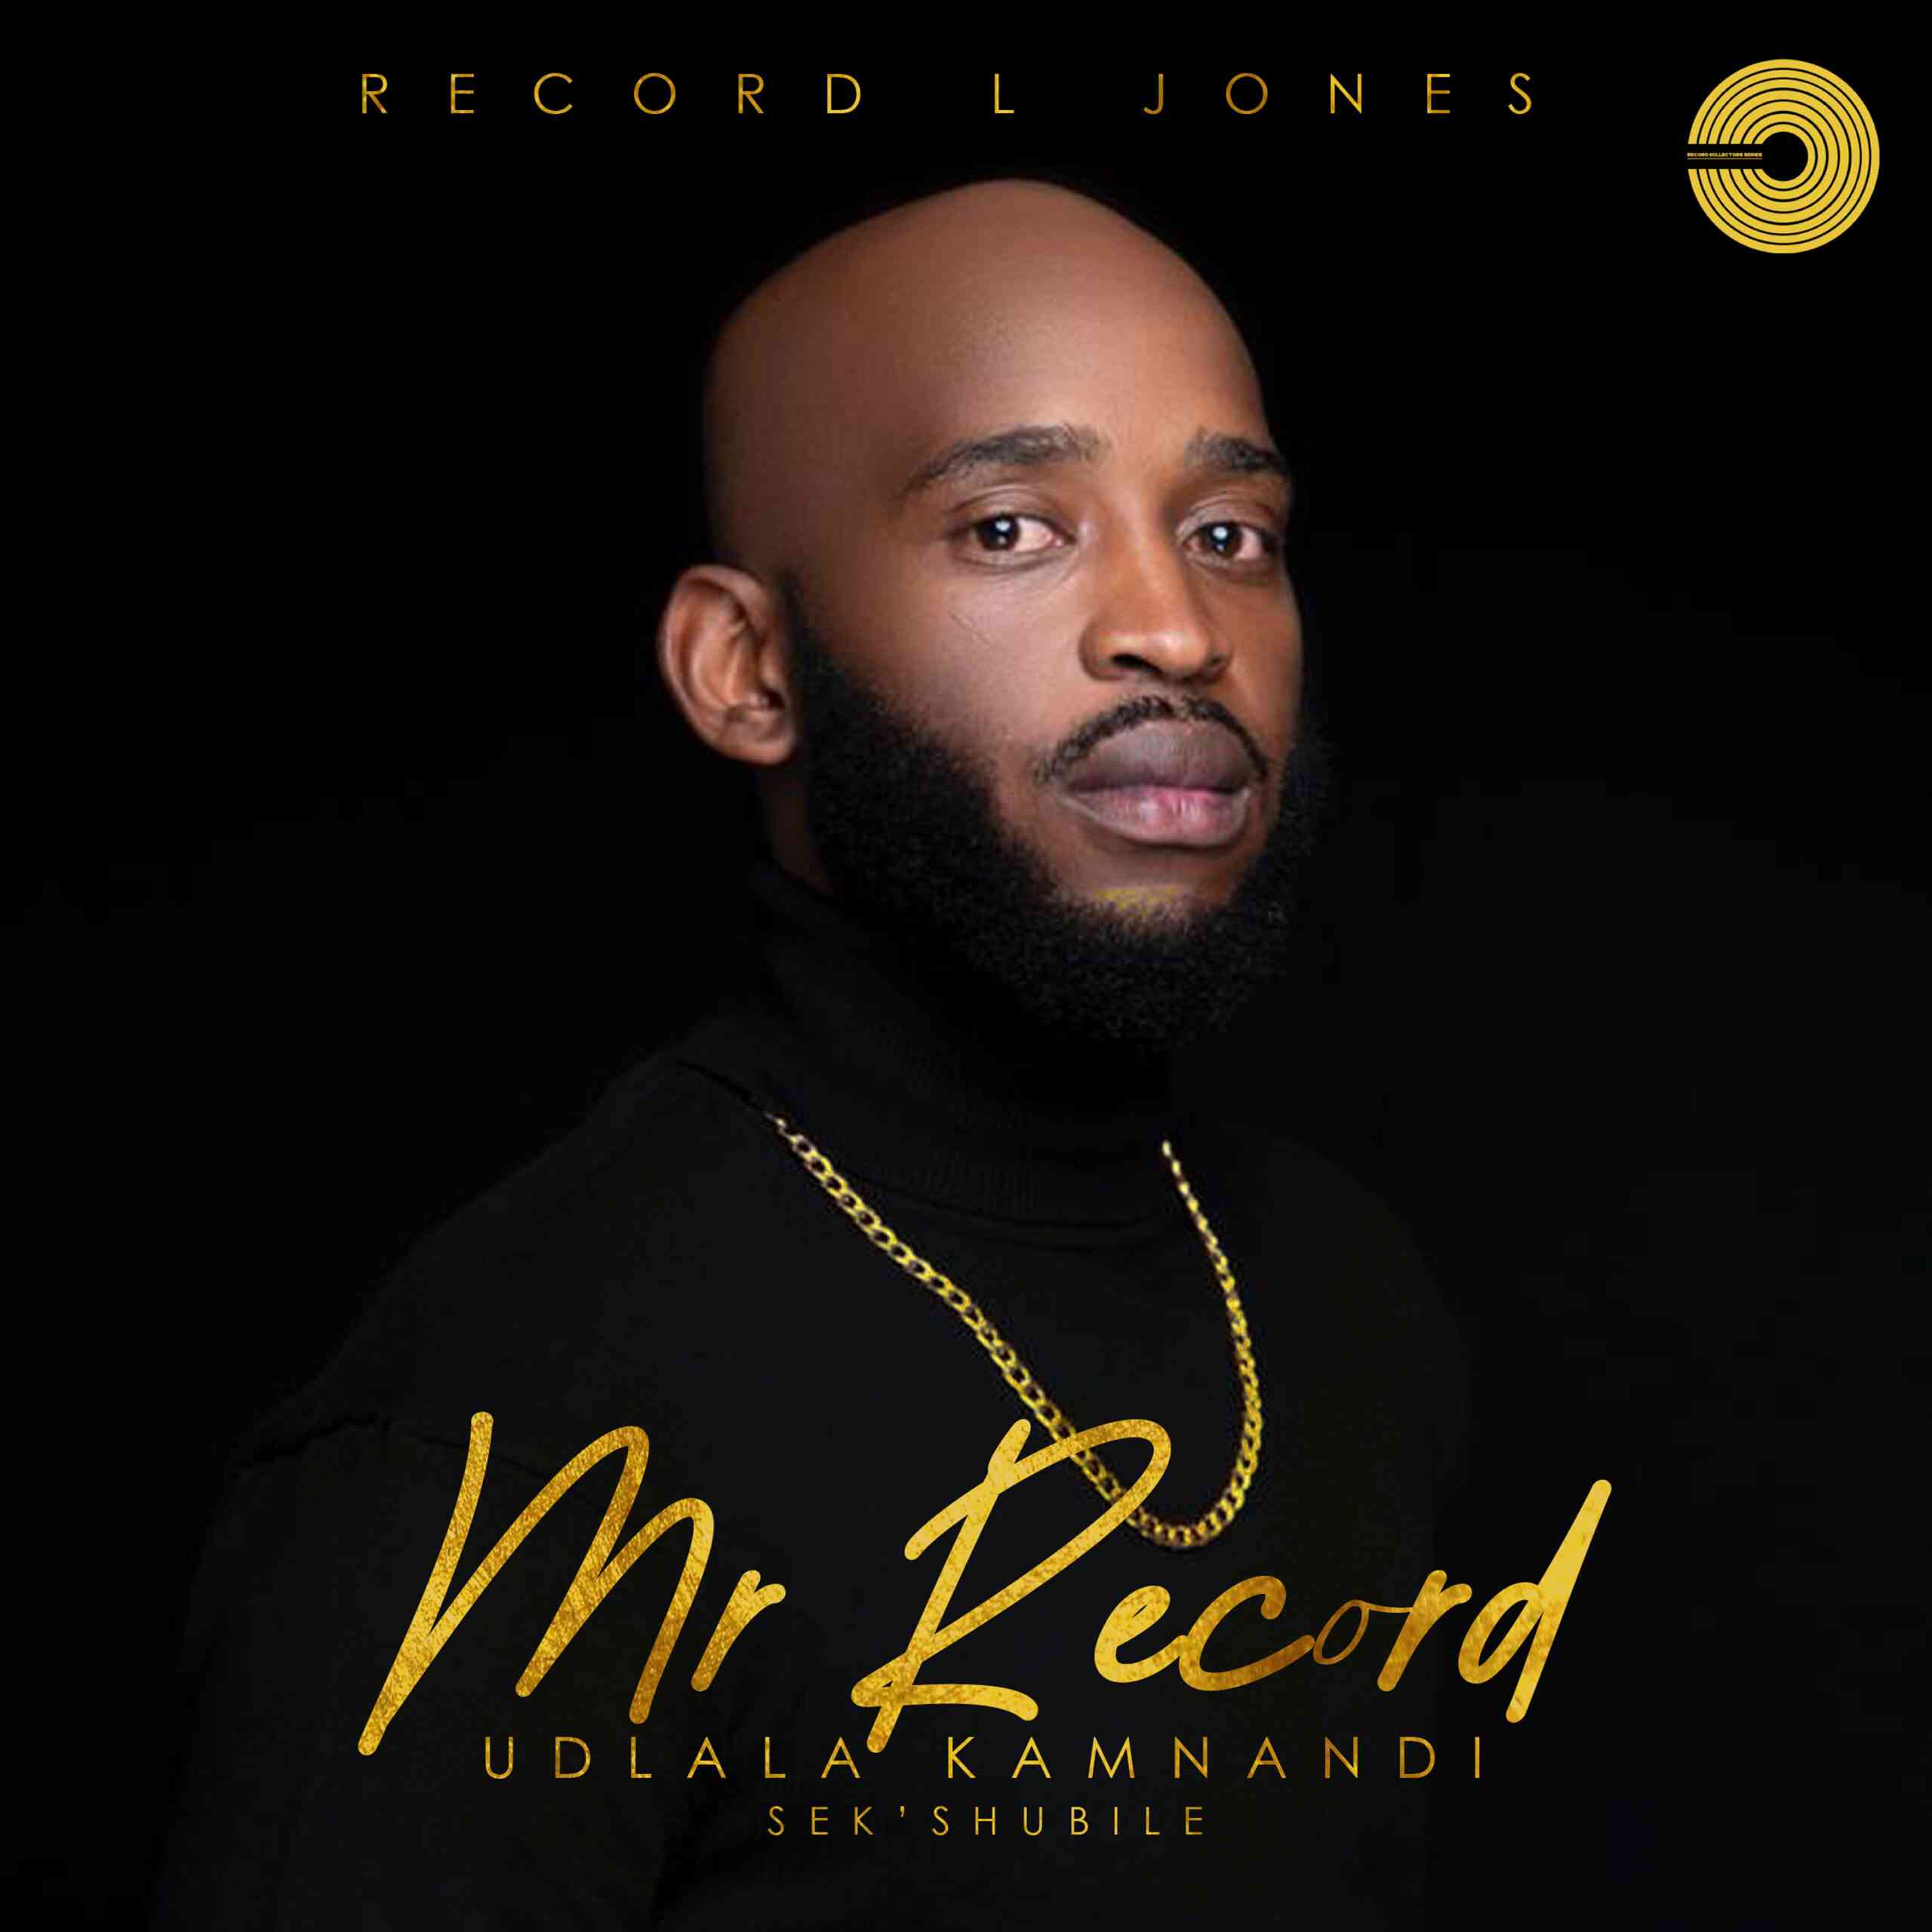 Record L Jones - Mr Record Udlala Kamnandi